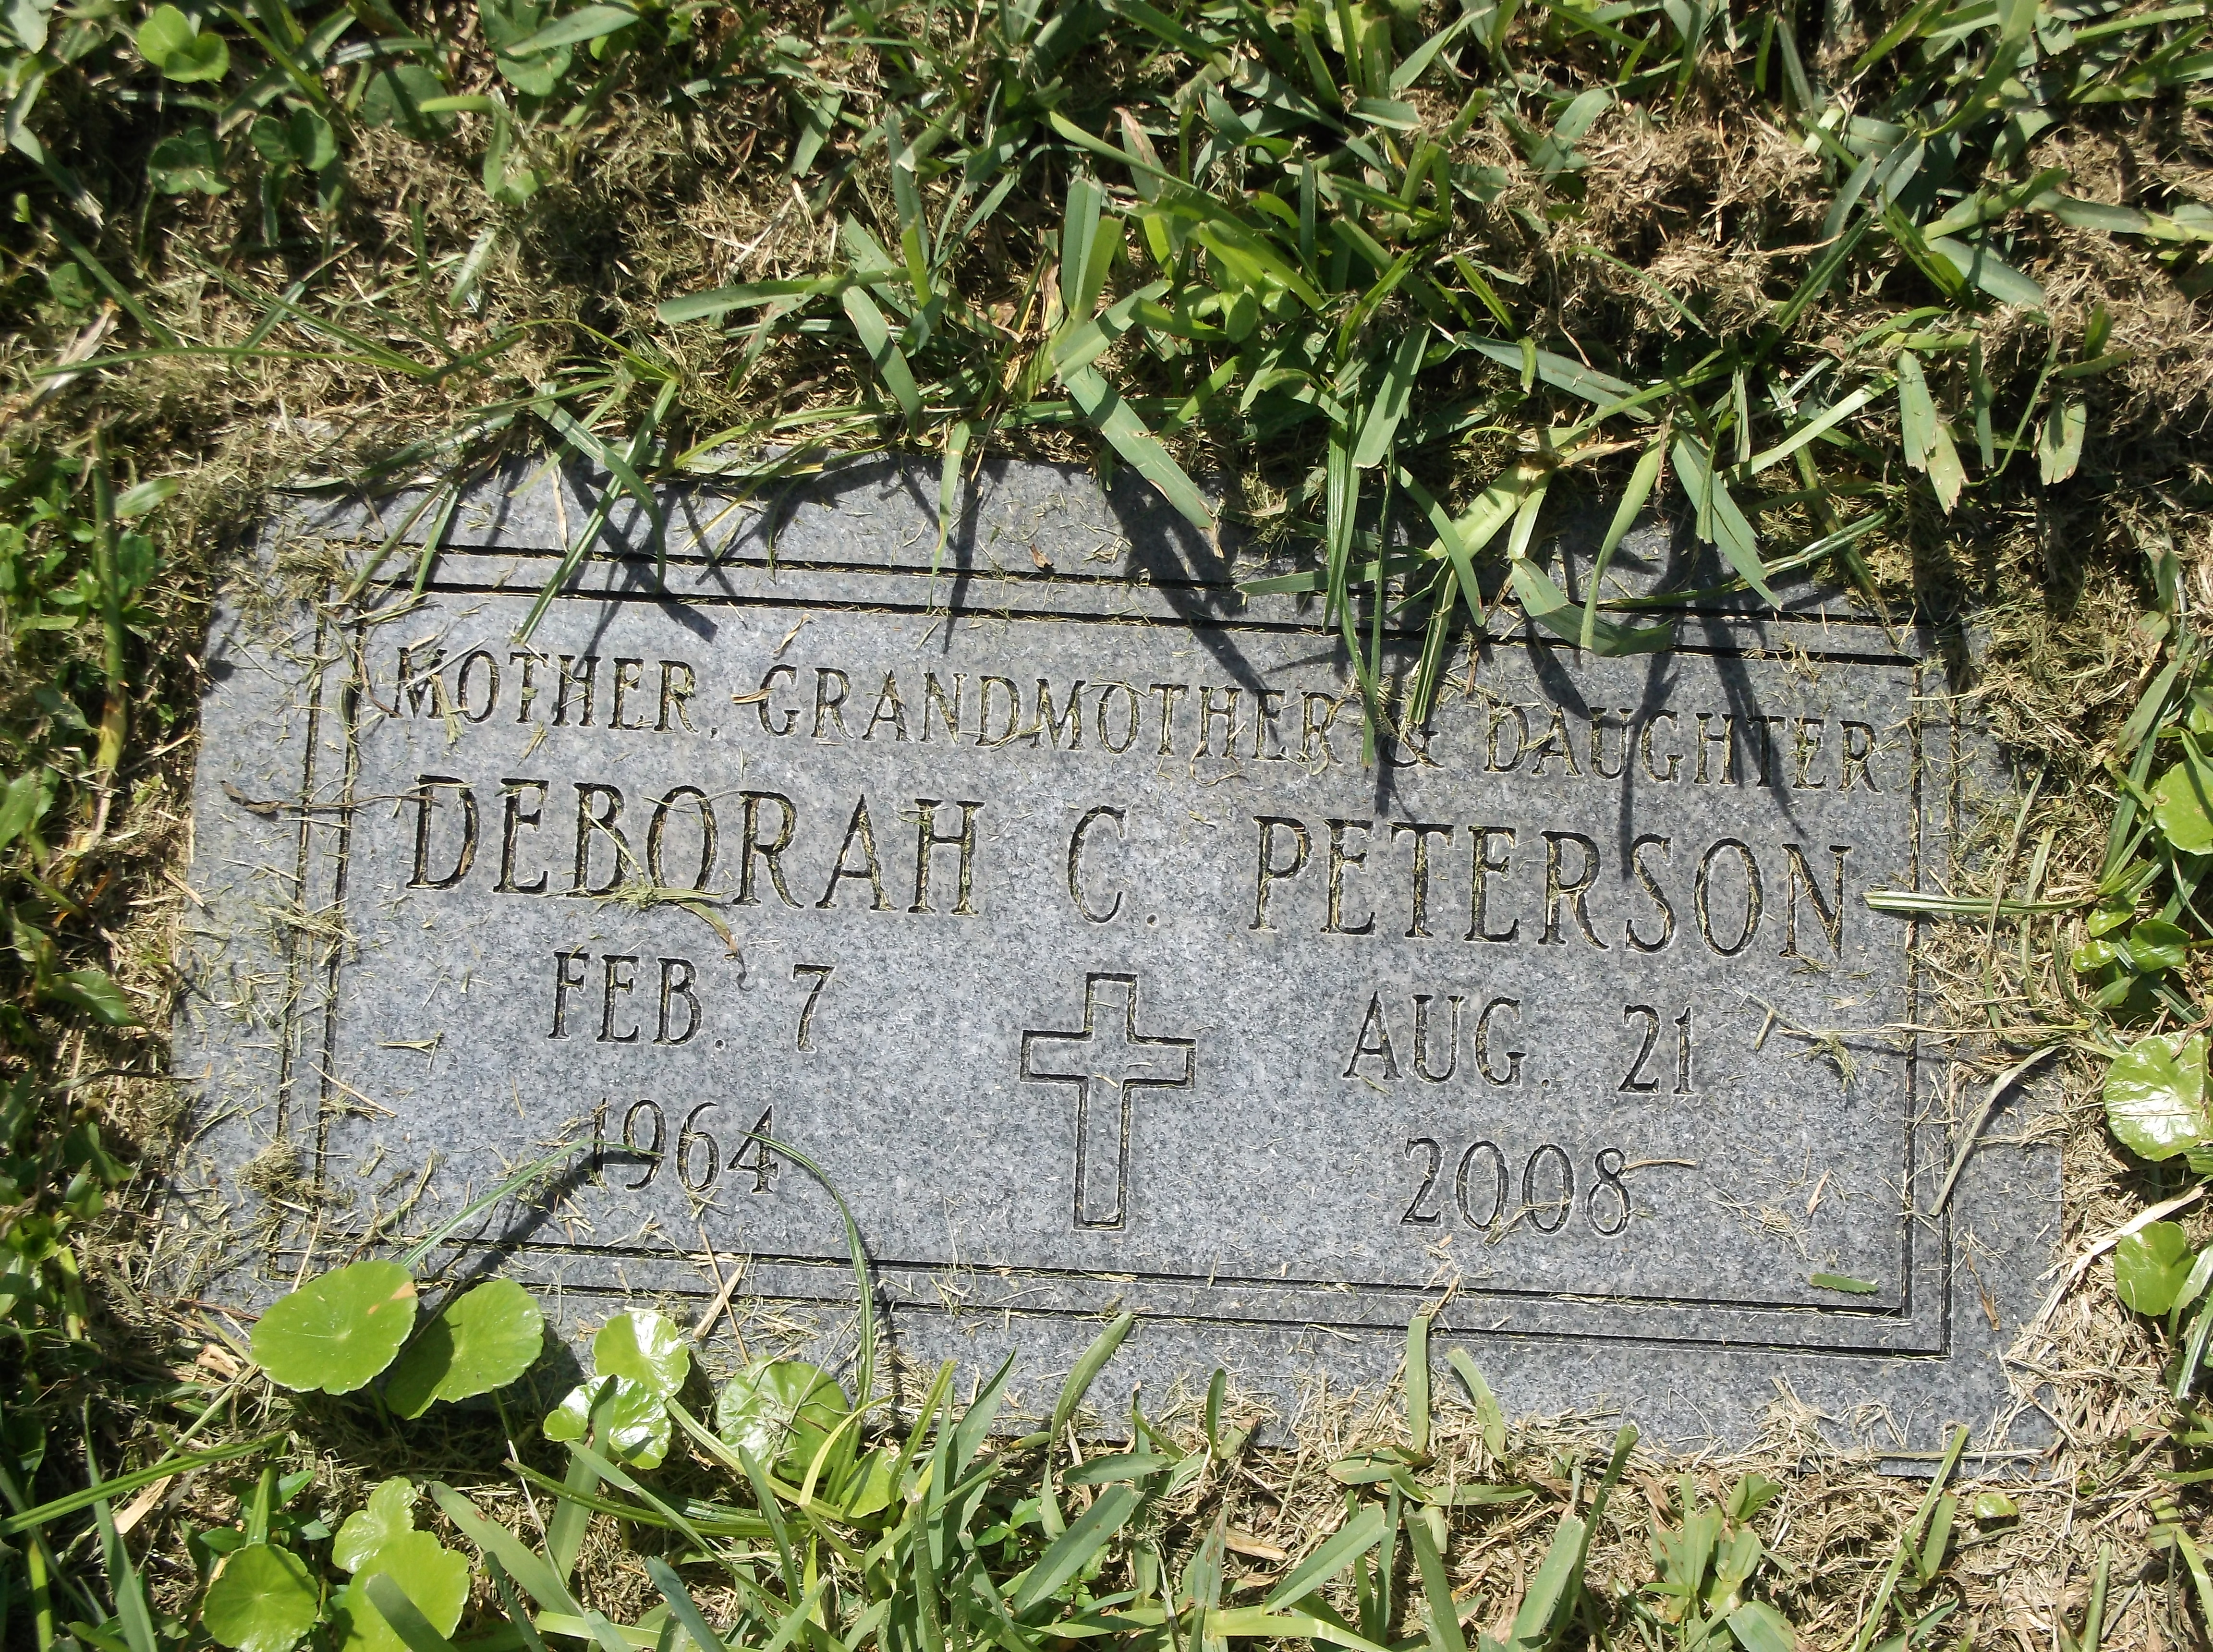 Deborah C Peterson